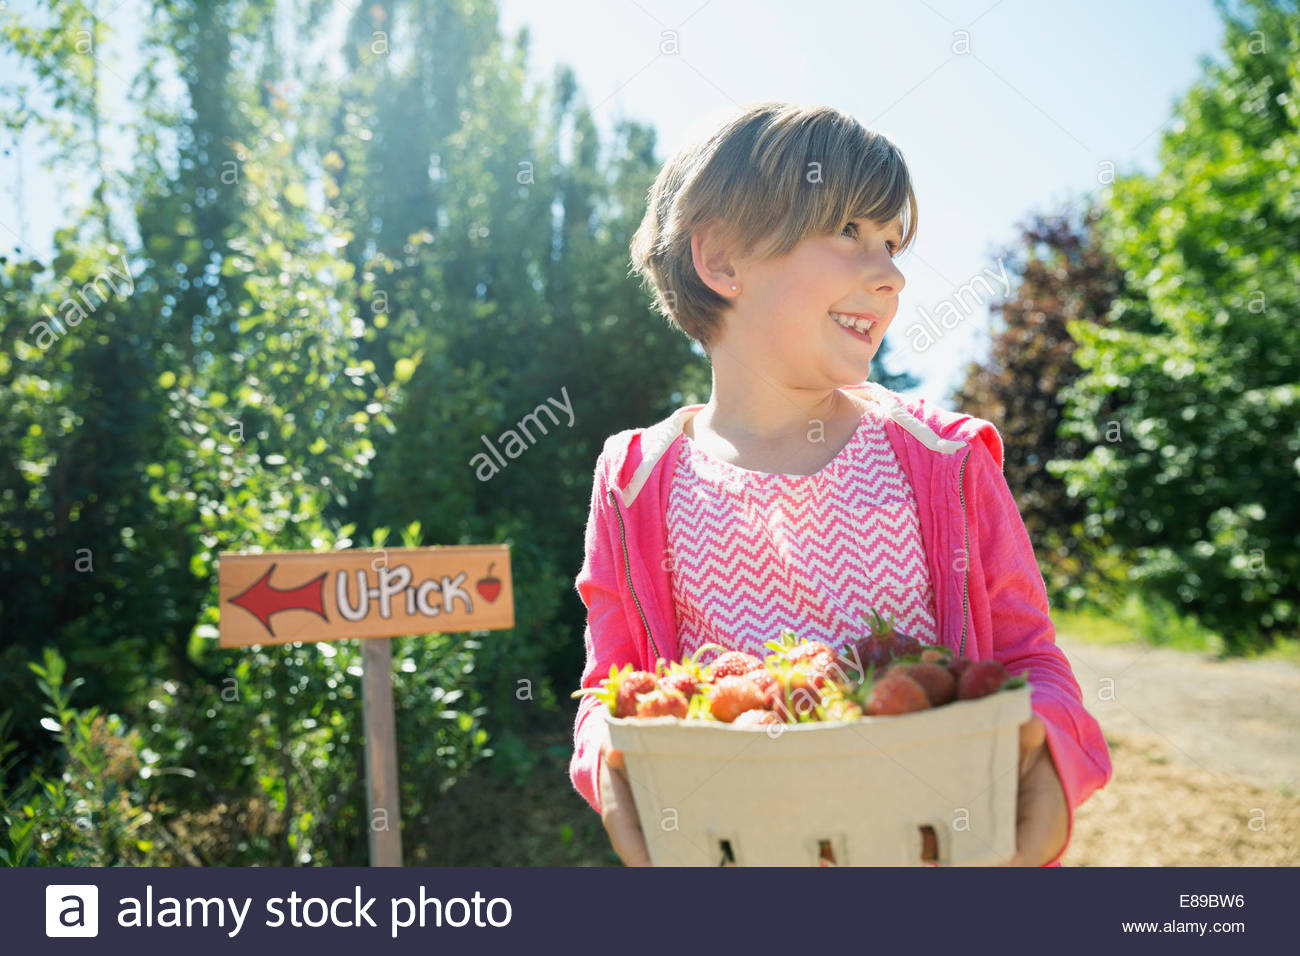 Smiling girl holding fresh picked strawberries Stock Photo